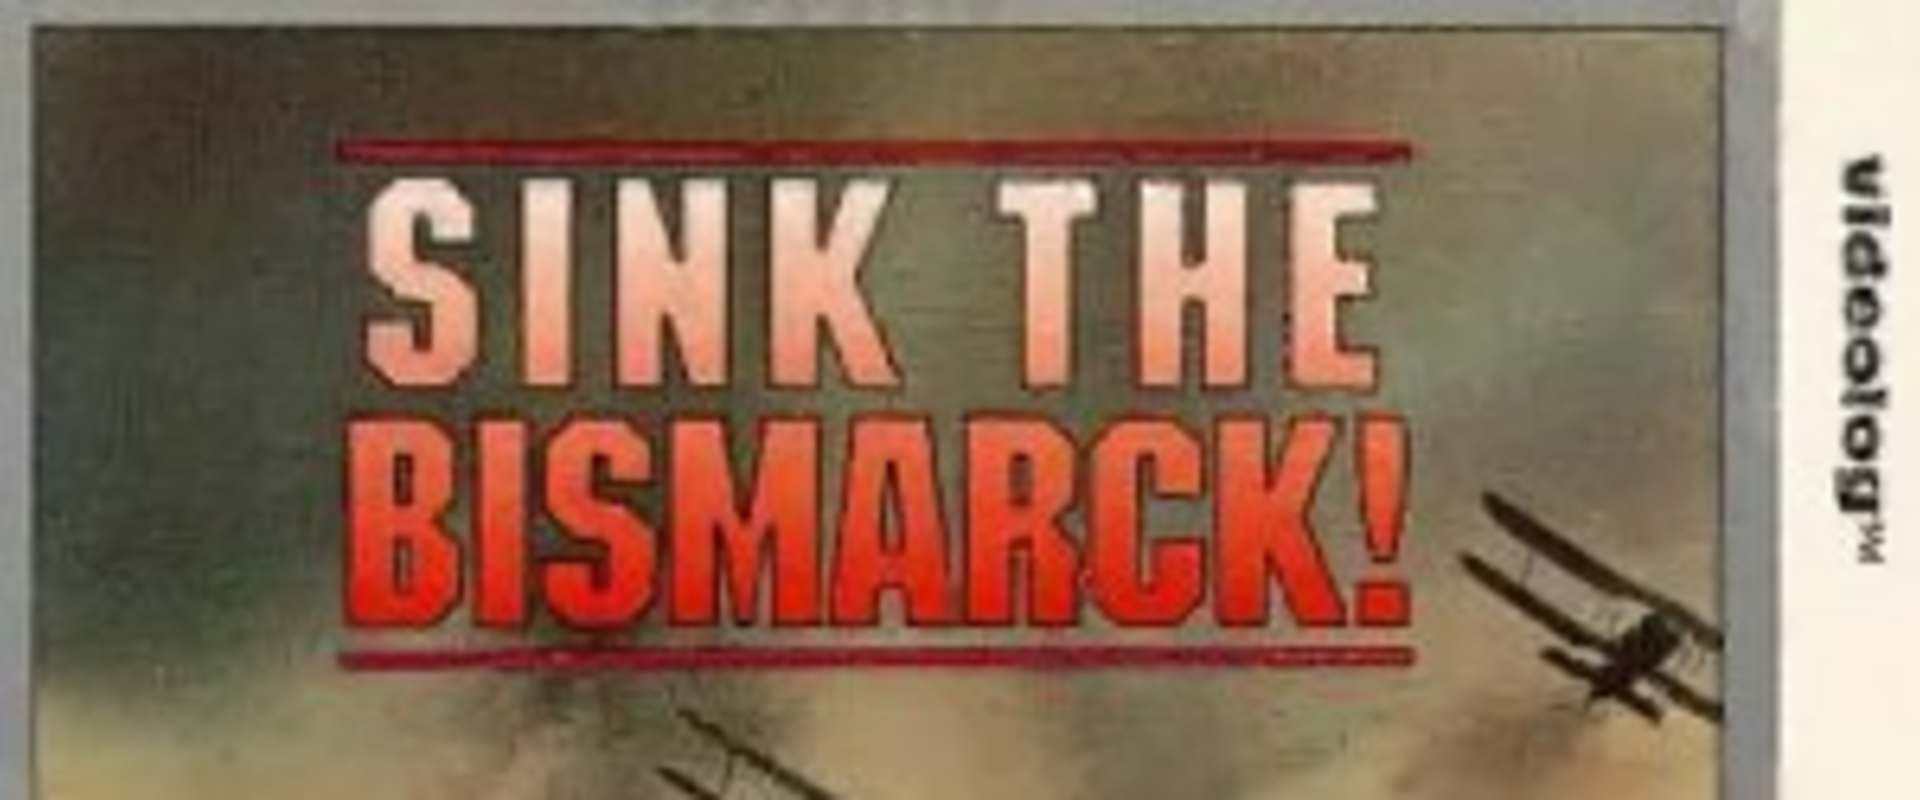 Sink the Bismarck! background 2